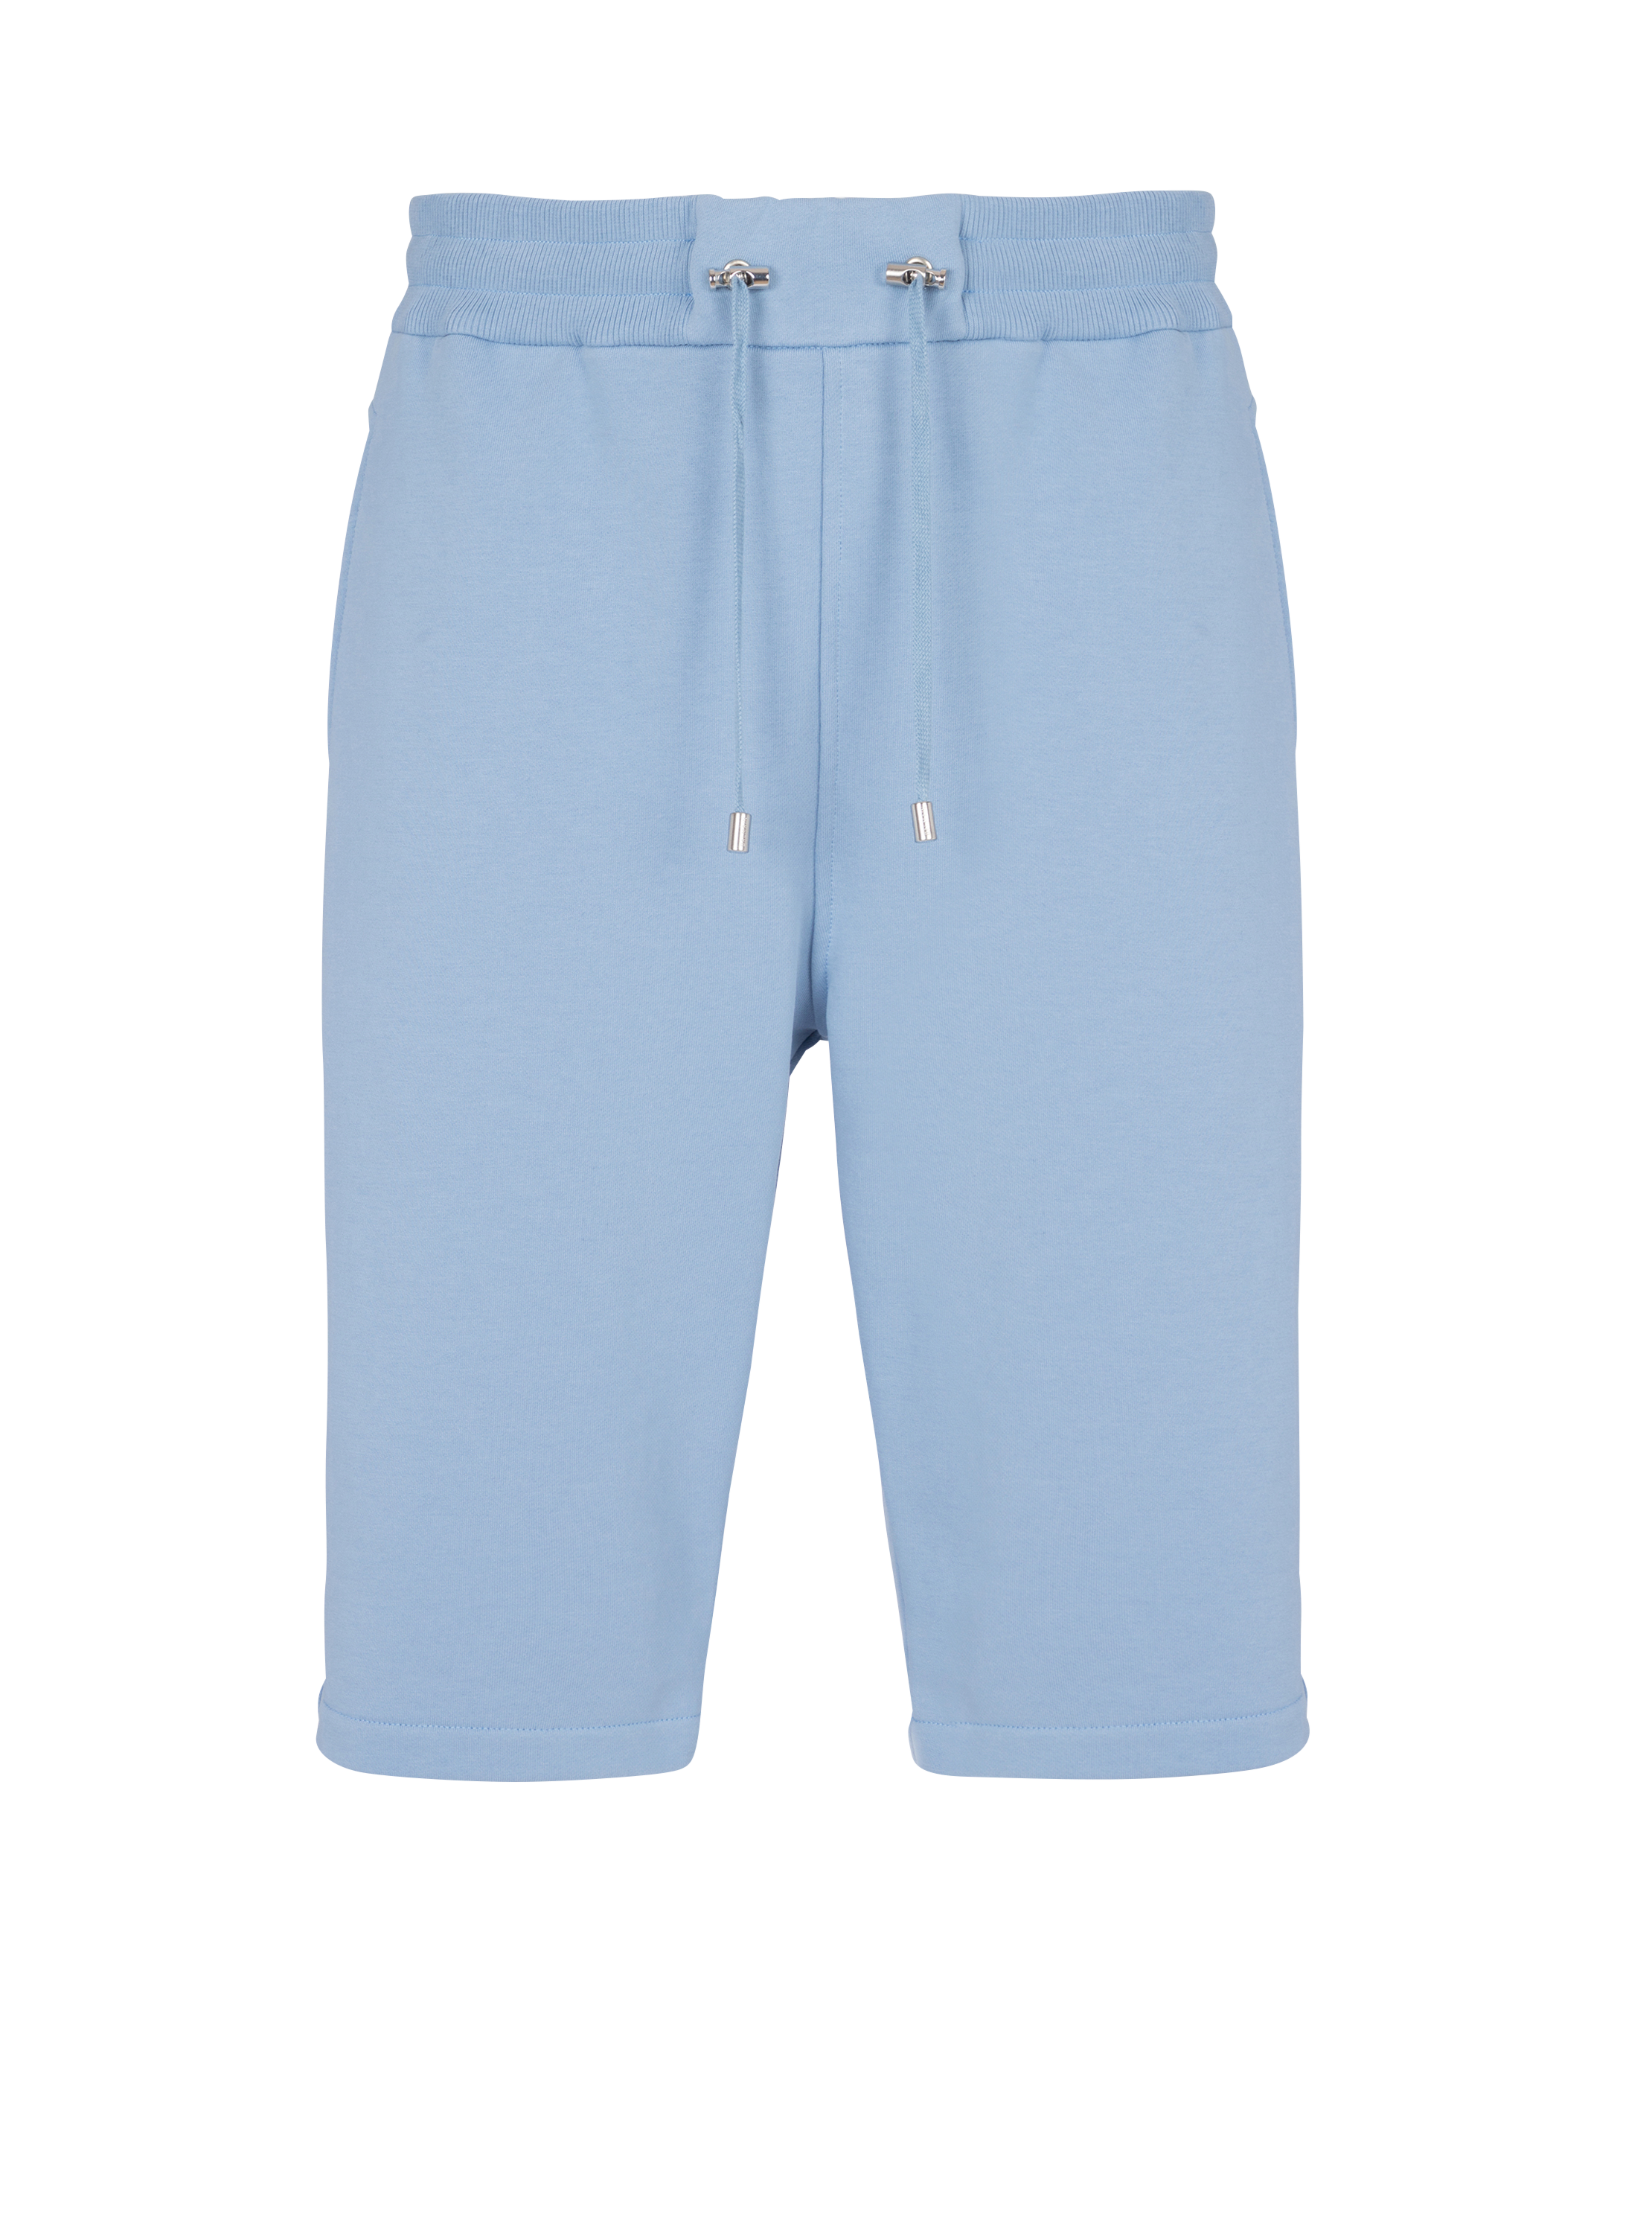 Cotton shorts with flocked Balmain Paris logo